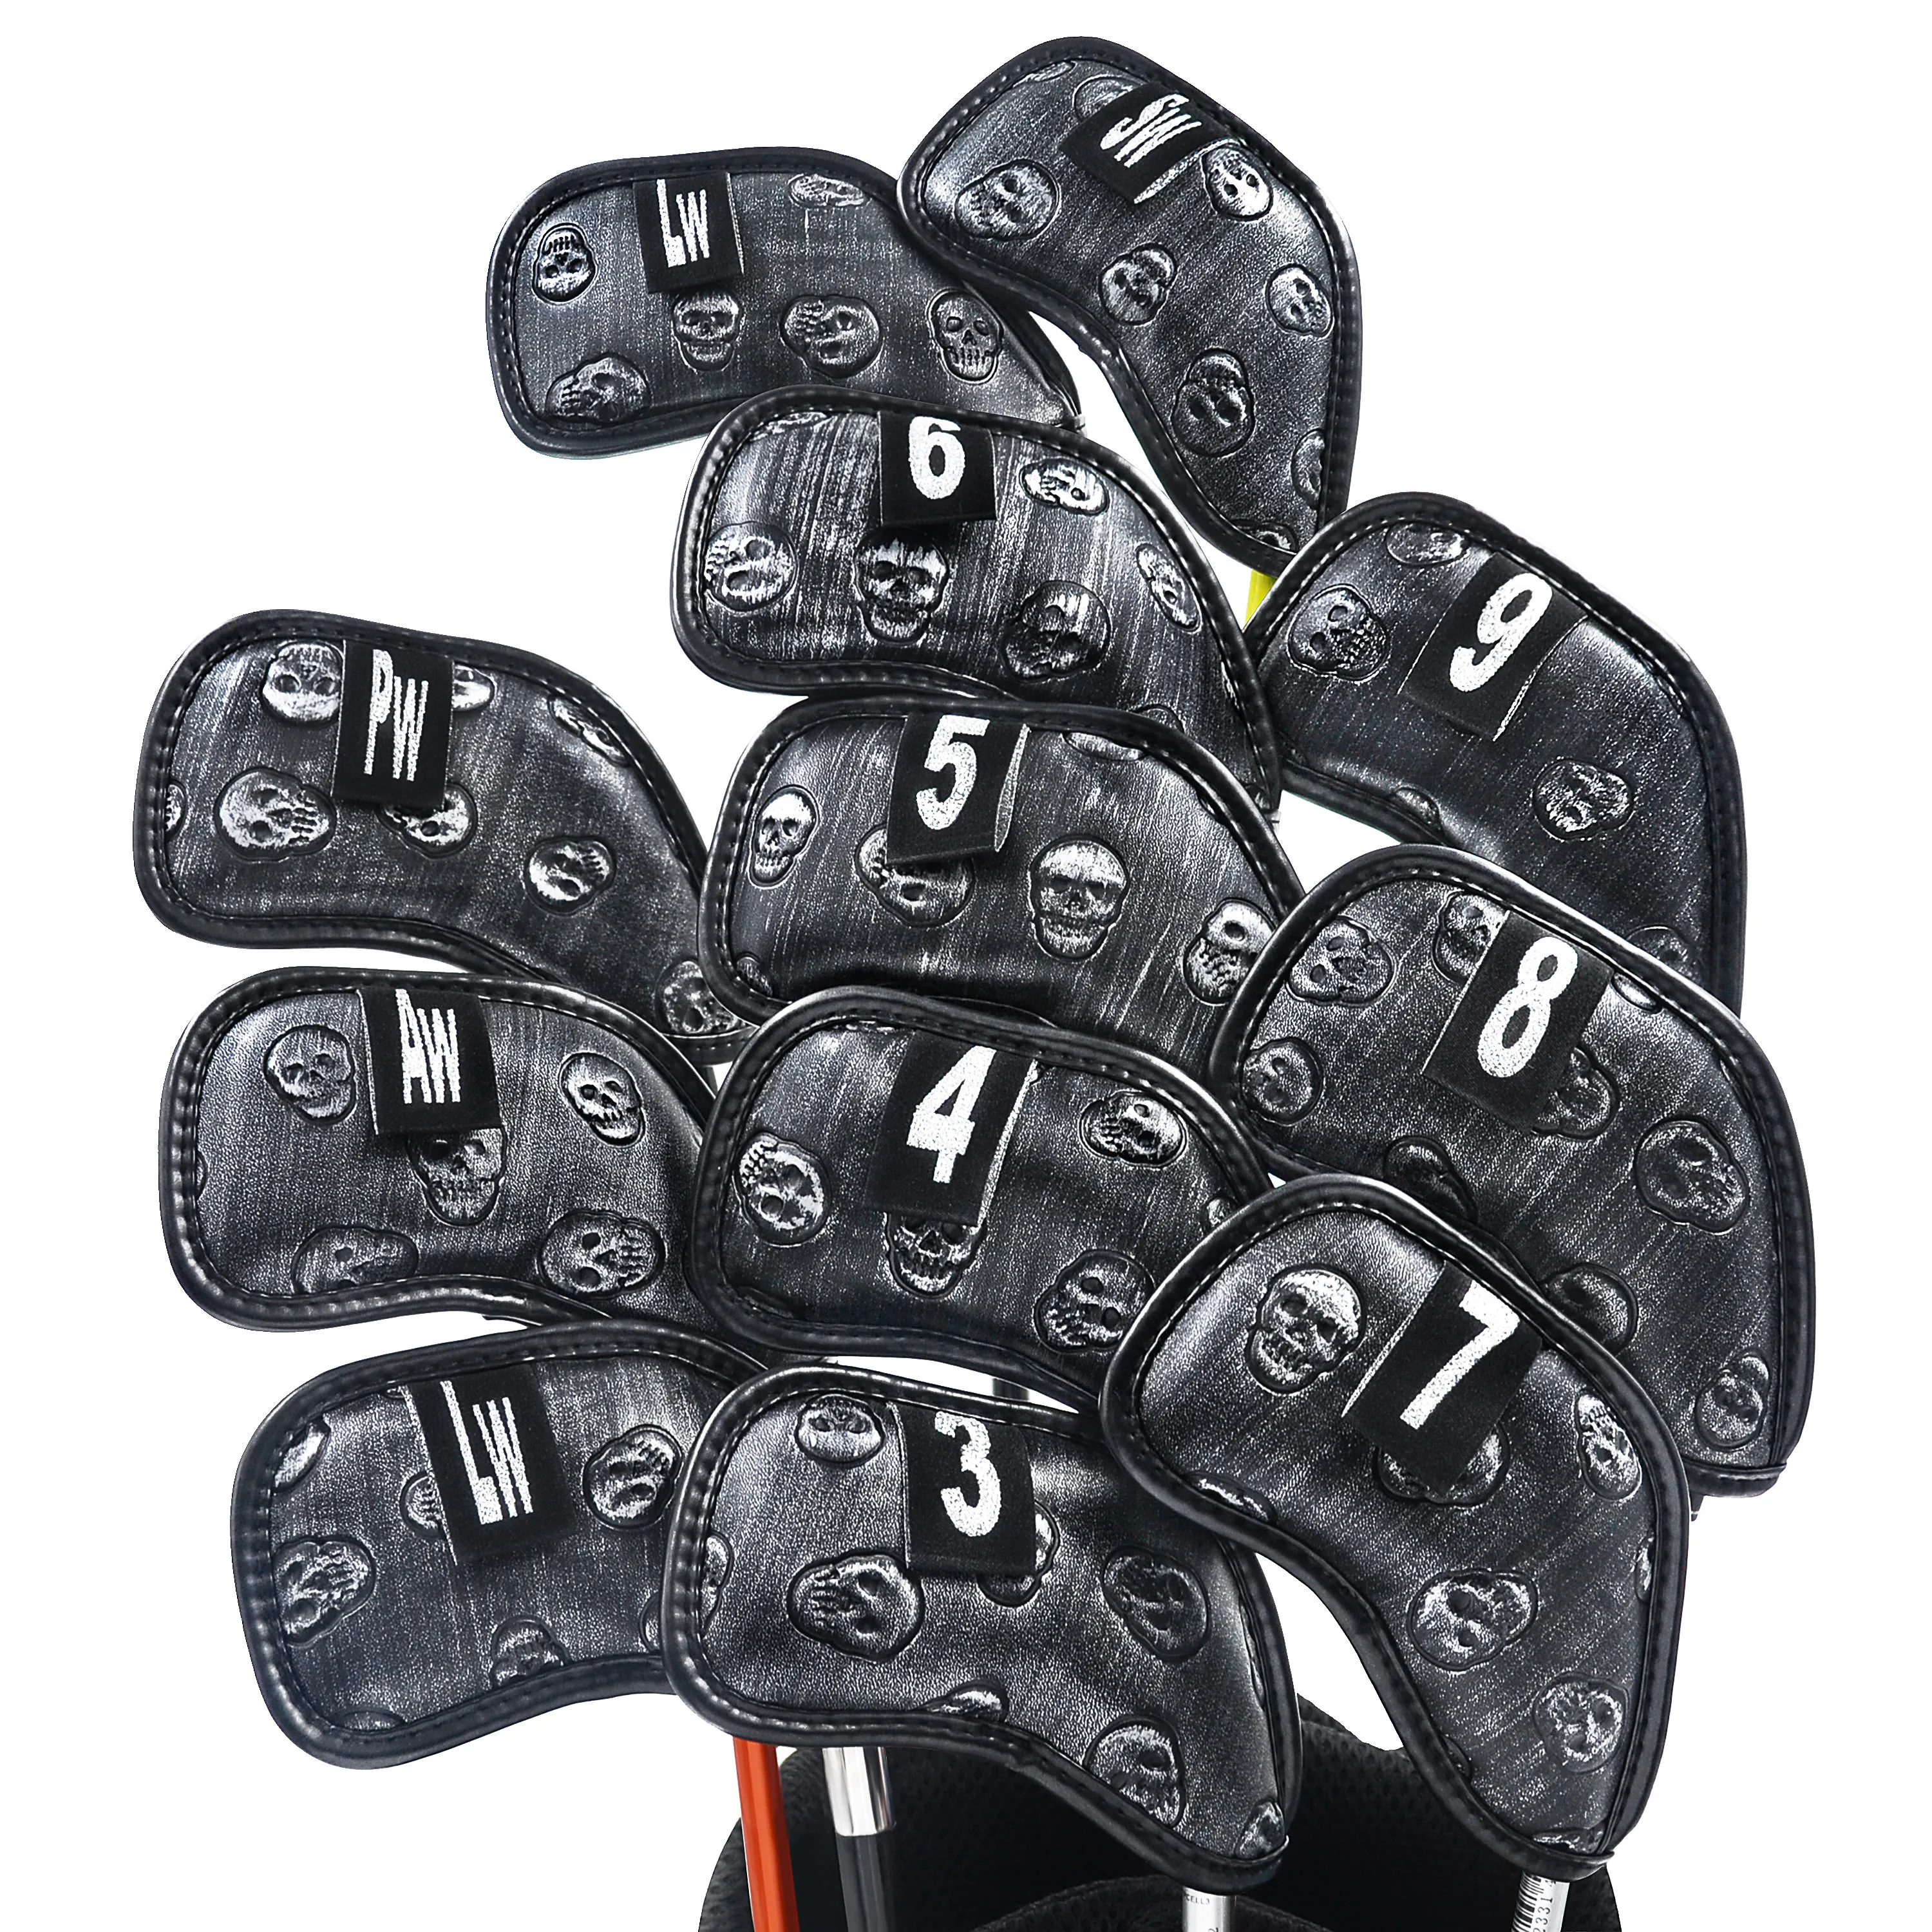 

NEW Champkey Black Silver Skull Golf Iron Head Cover Pack of 12pcs Premium Polyurethane Plus Memory Material Club Covers